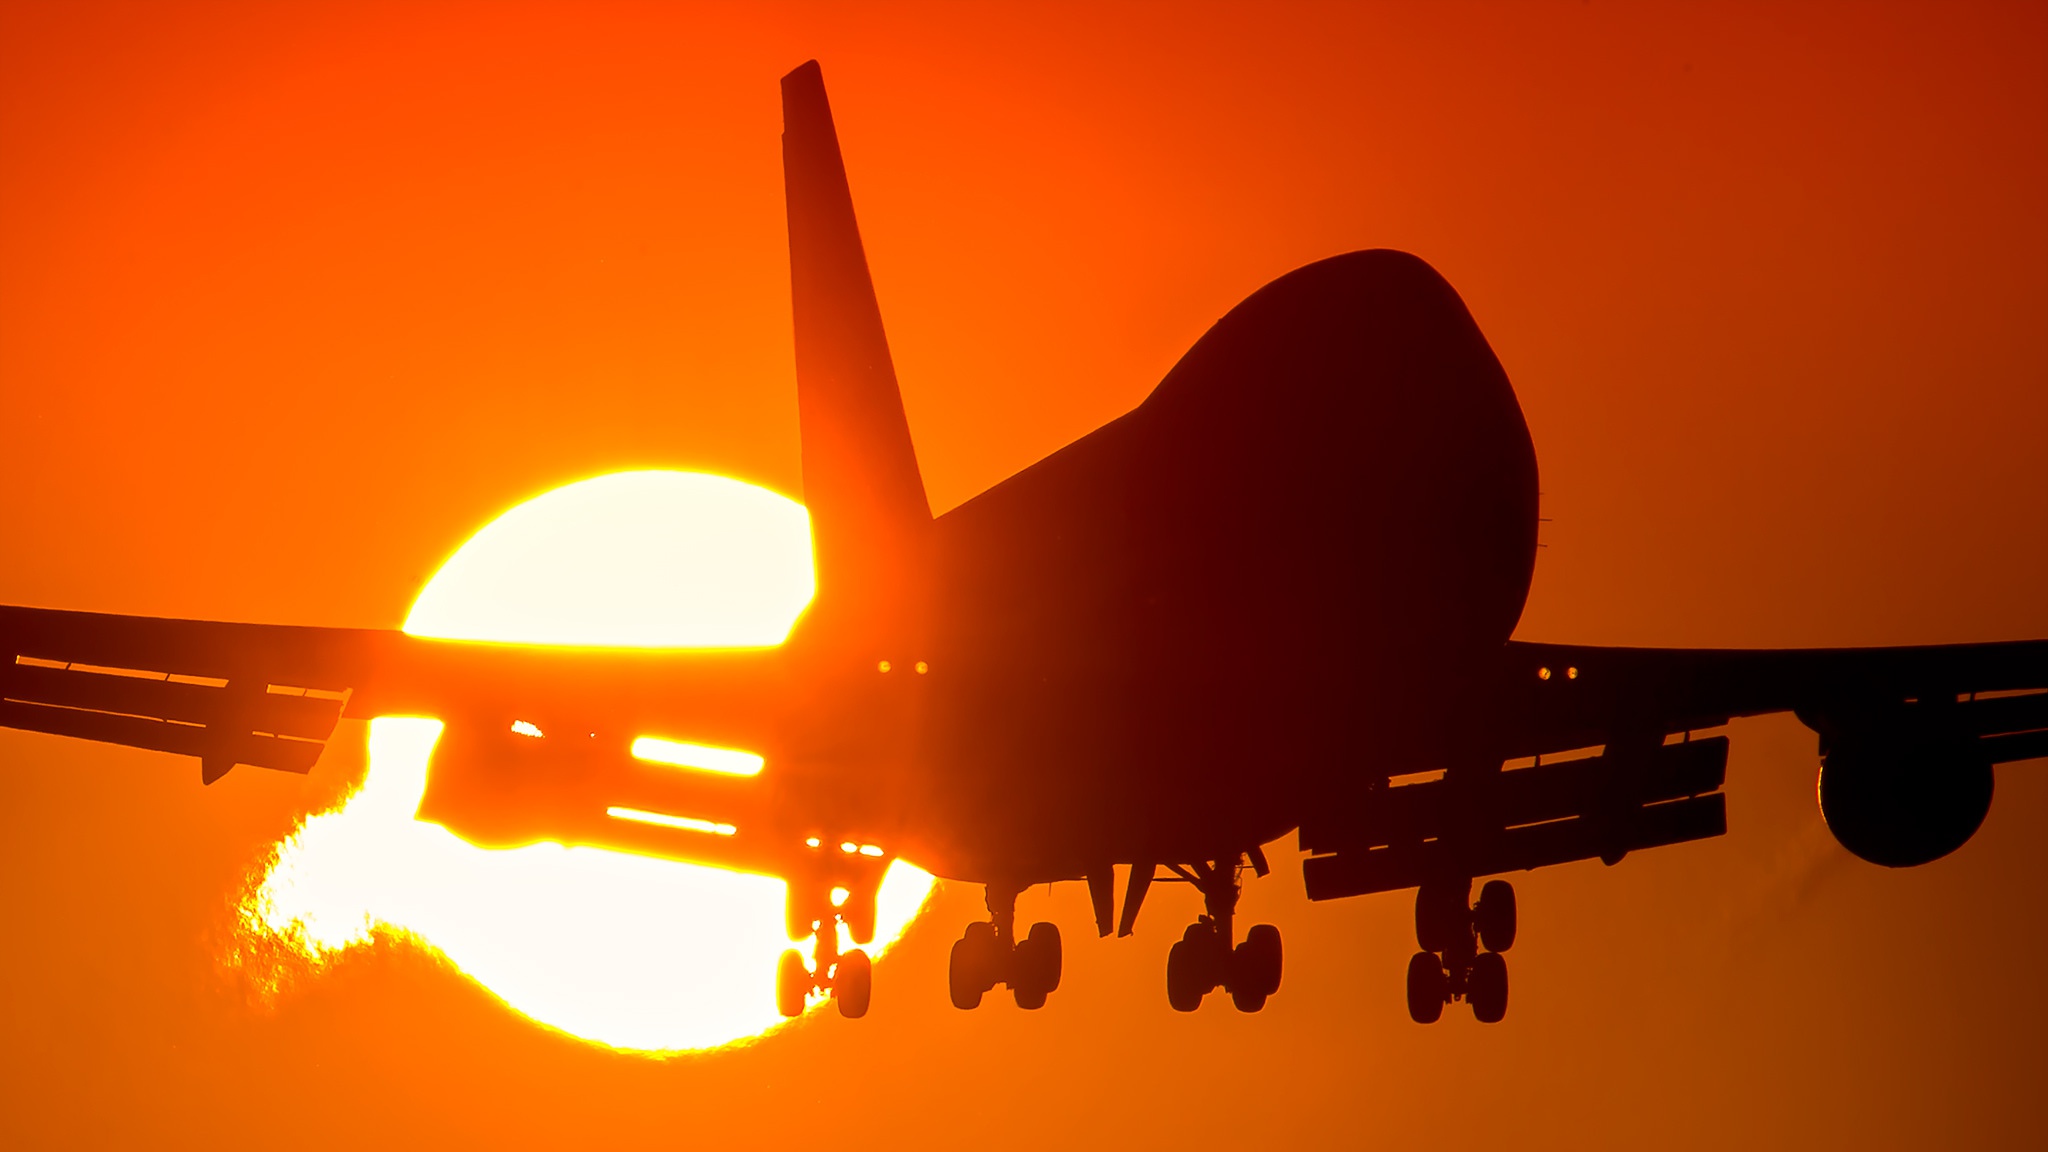 boeing 747, vehicles, aircraft, passenger plane, silhouette, sun